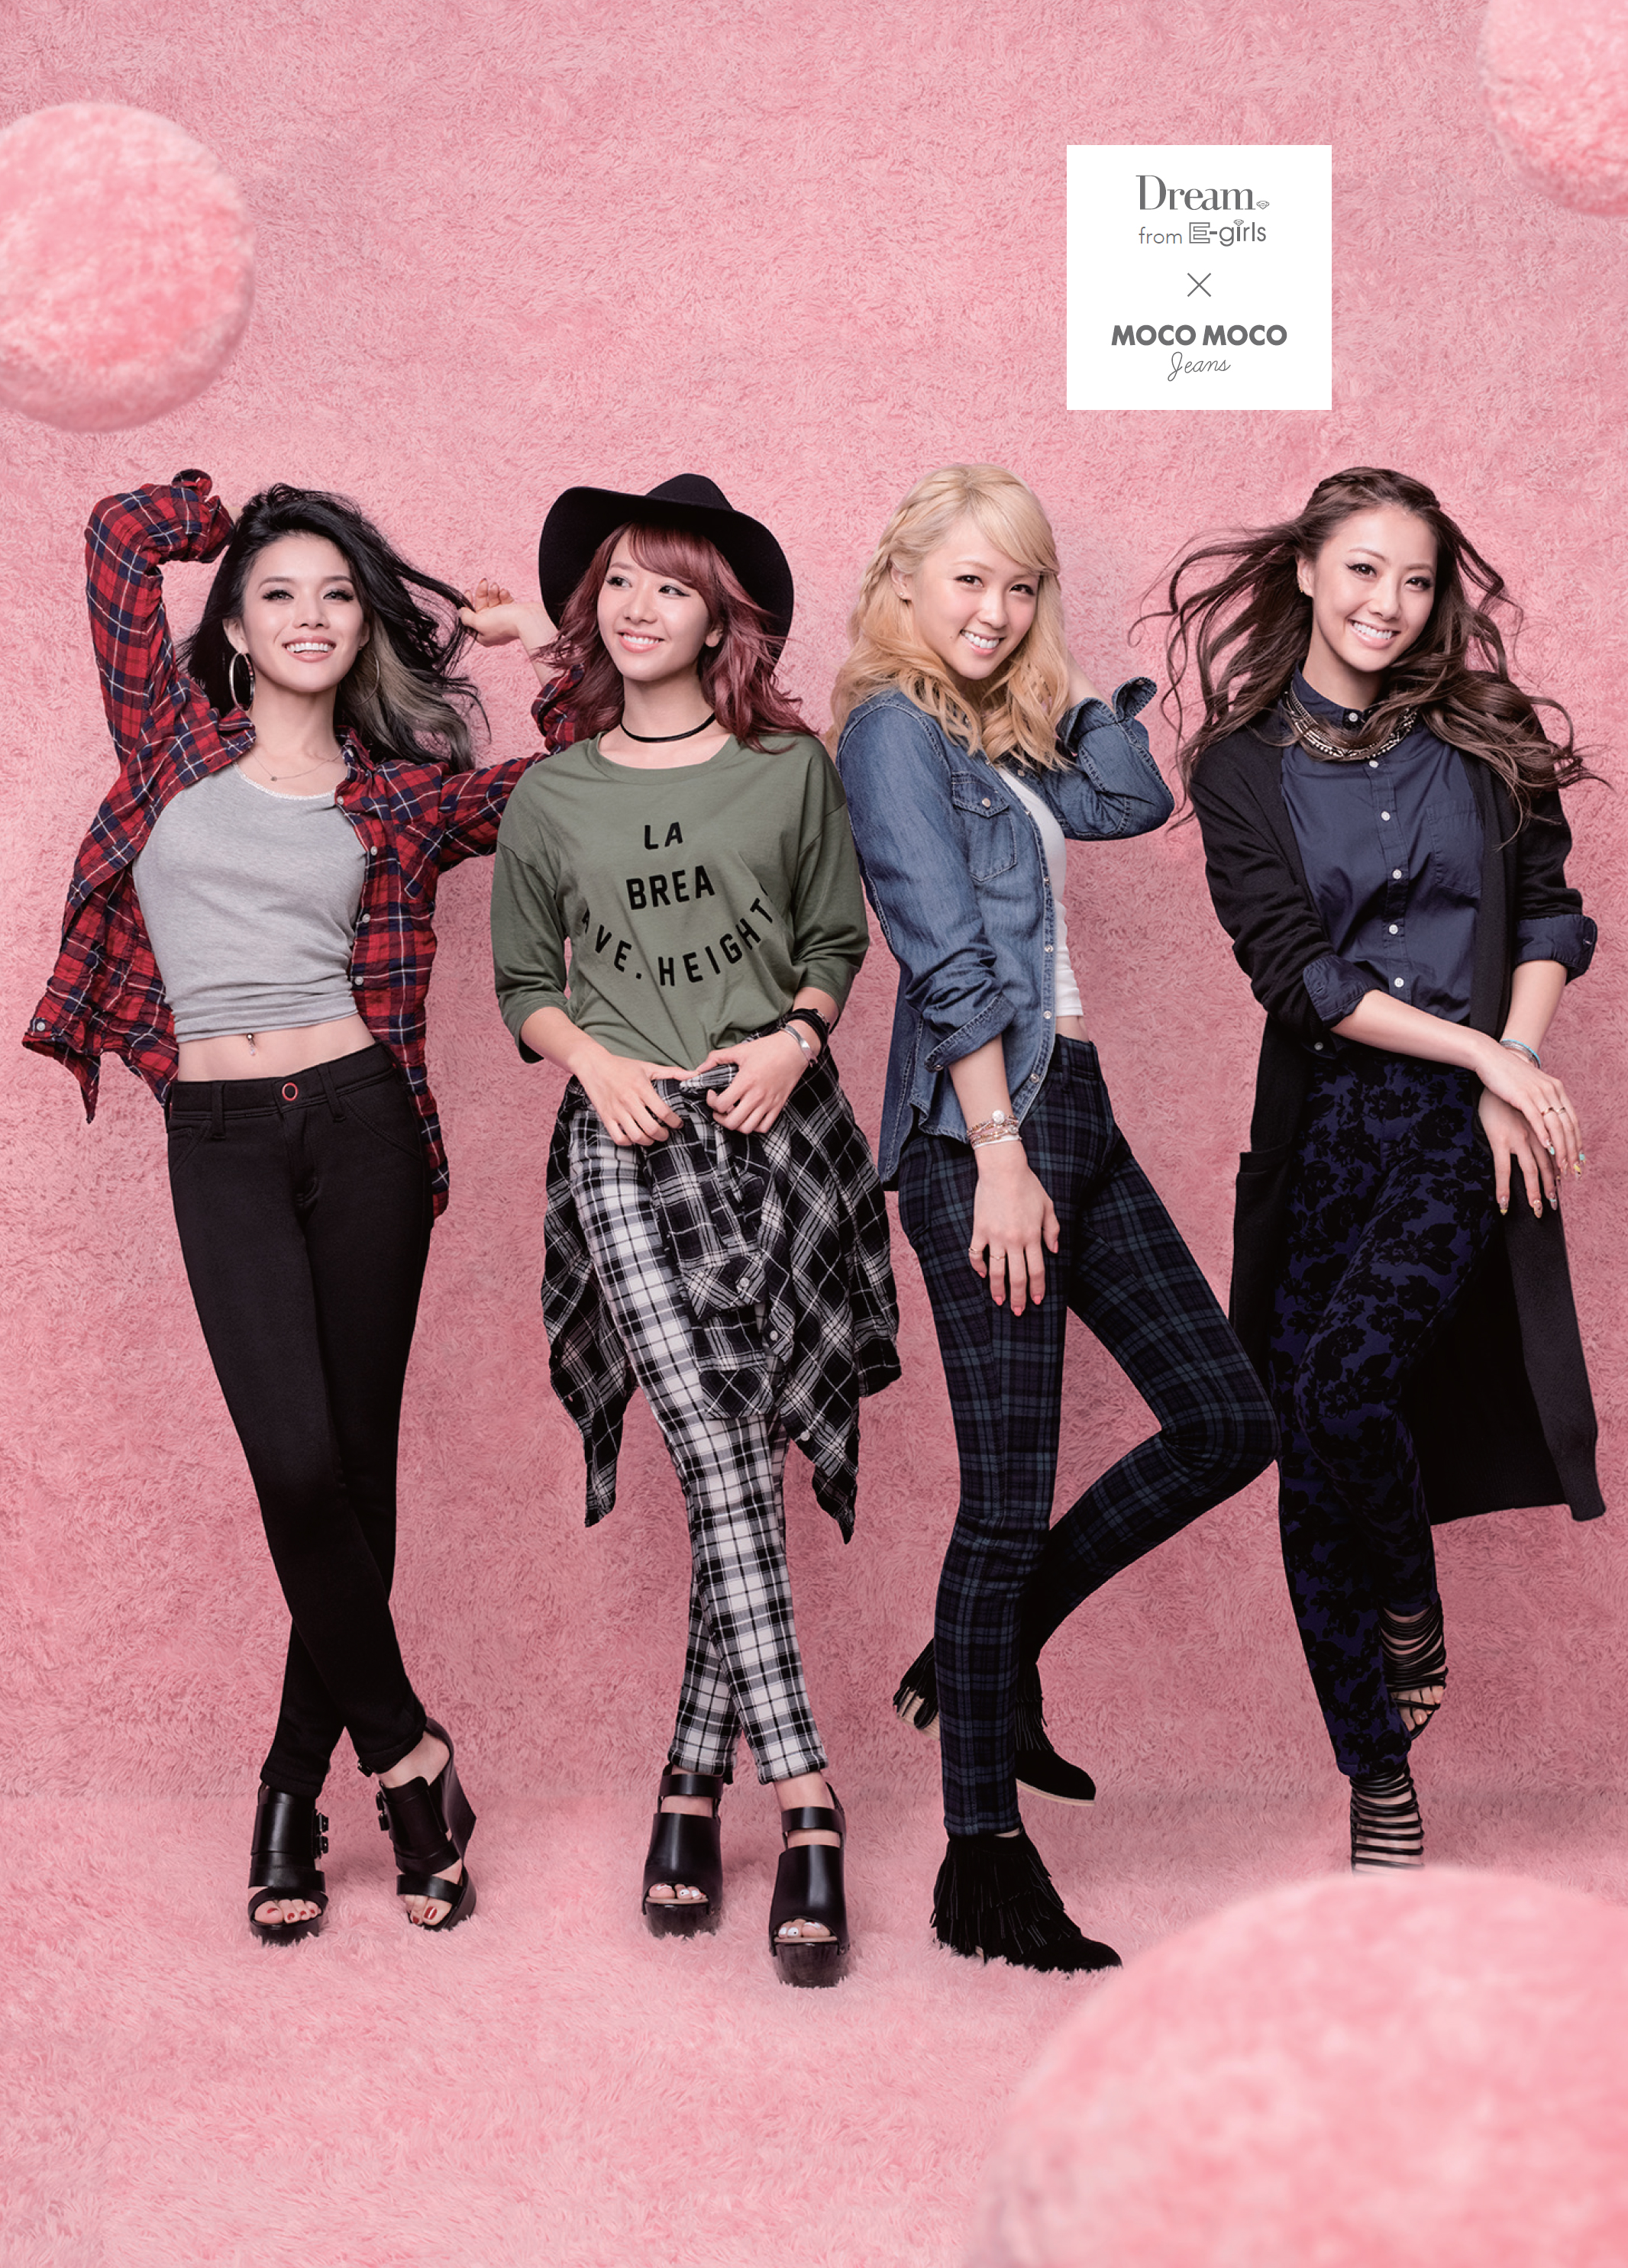 Right On ｍｏｃｏｍｏｃｏ Jeans キャンペーンcm イメージキャラクターとしてe Girlsの中心メンバーとしても活躍中の Dream の4人がcm出演 新cm モコモコイロイロ 篇 株式会社ライトオンのプレスリリース